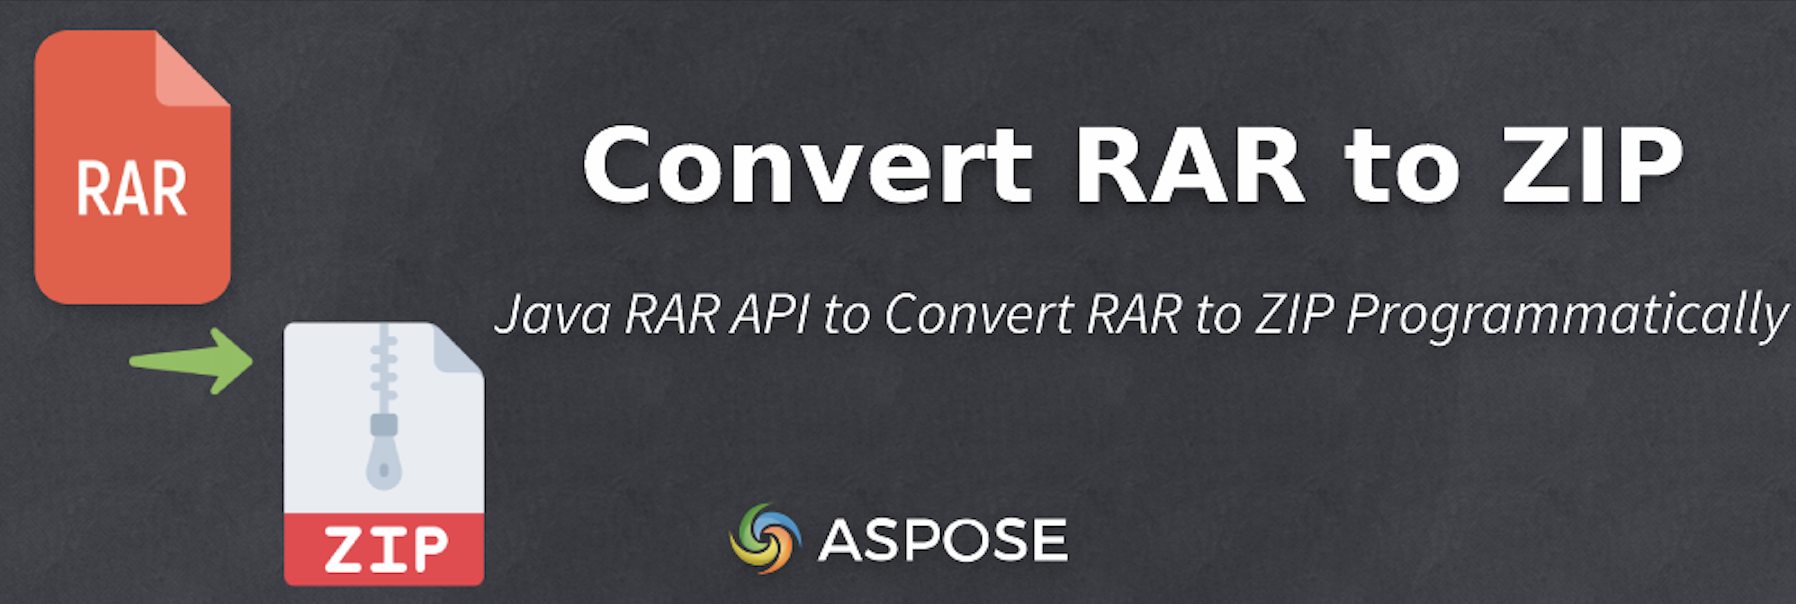 Convertir RAR en ZIP en Java - API Java RAR